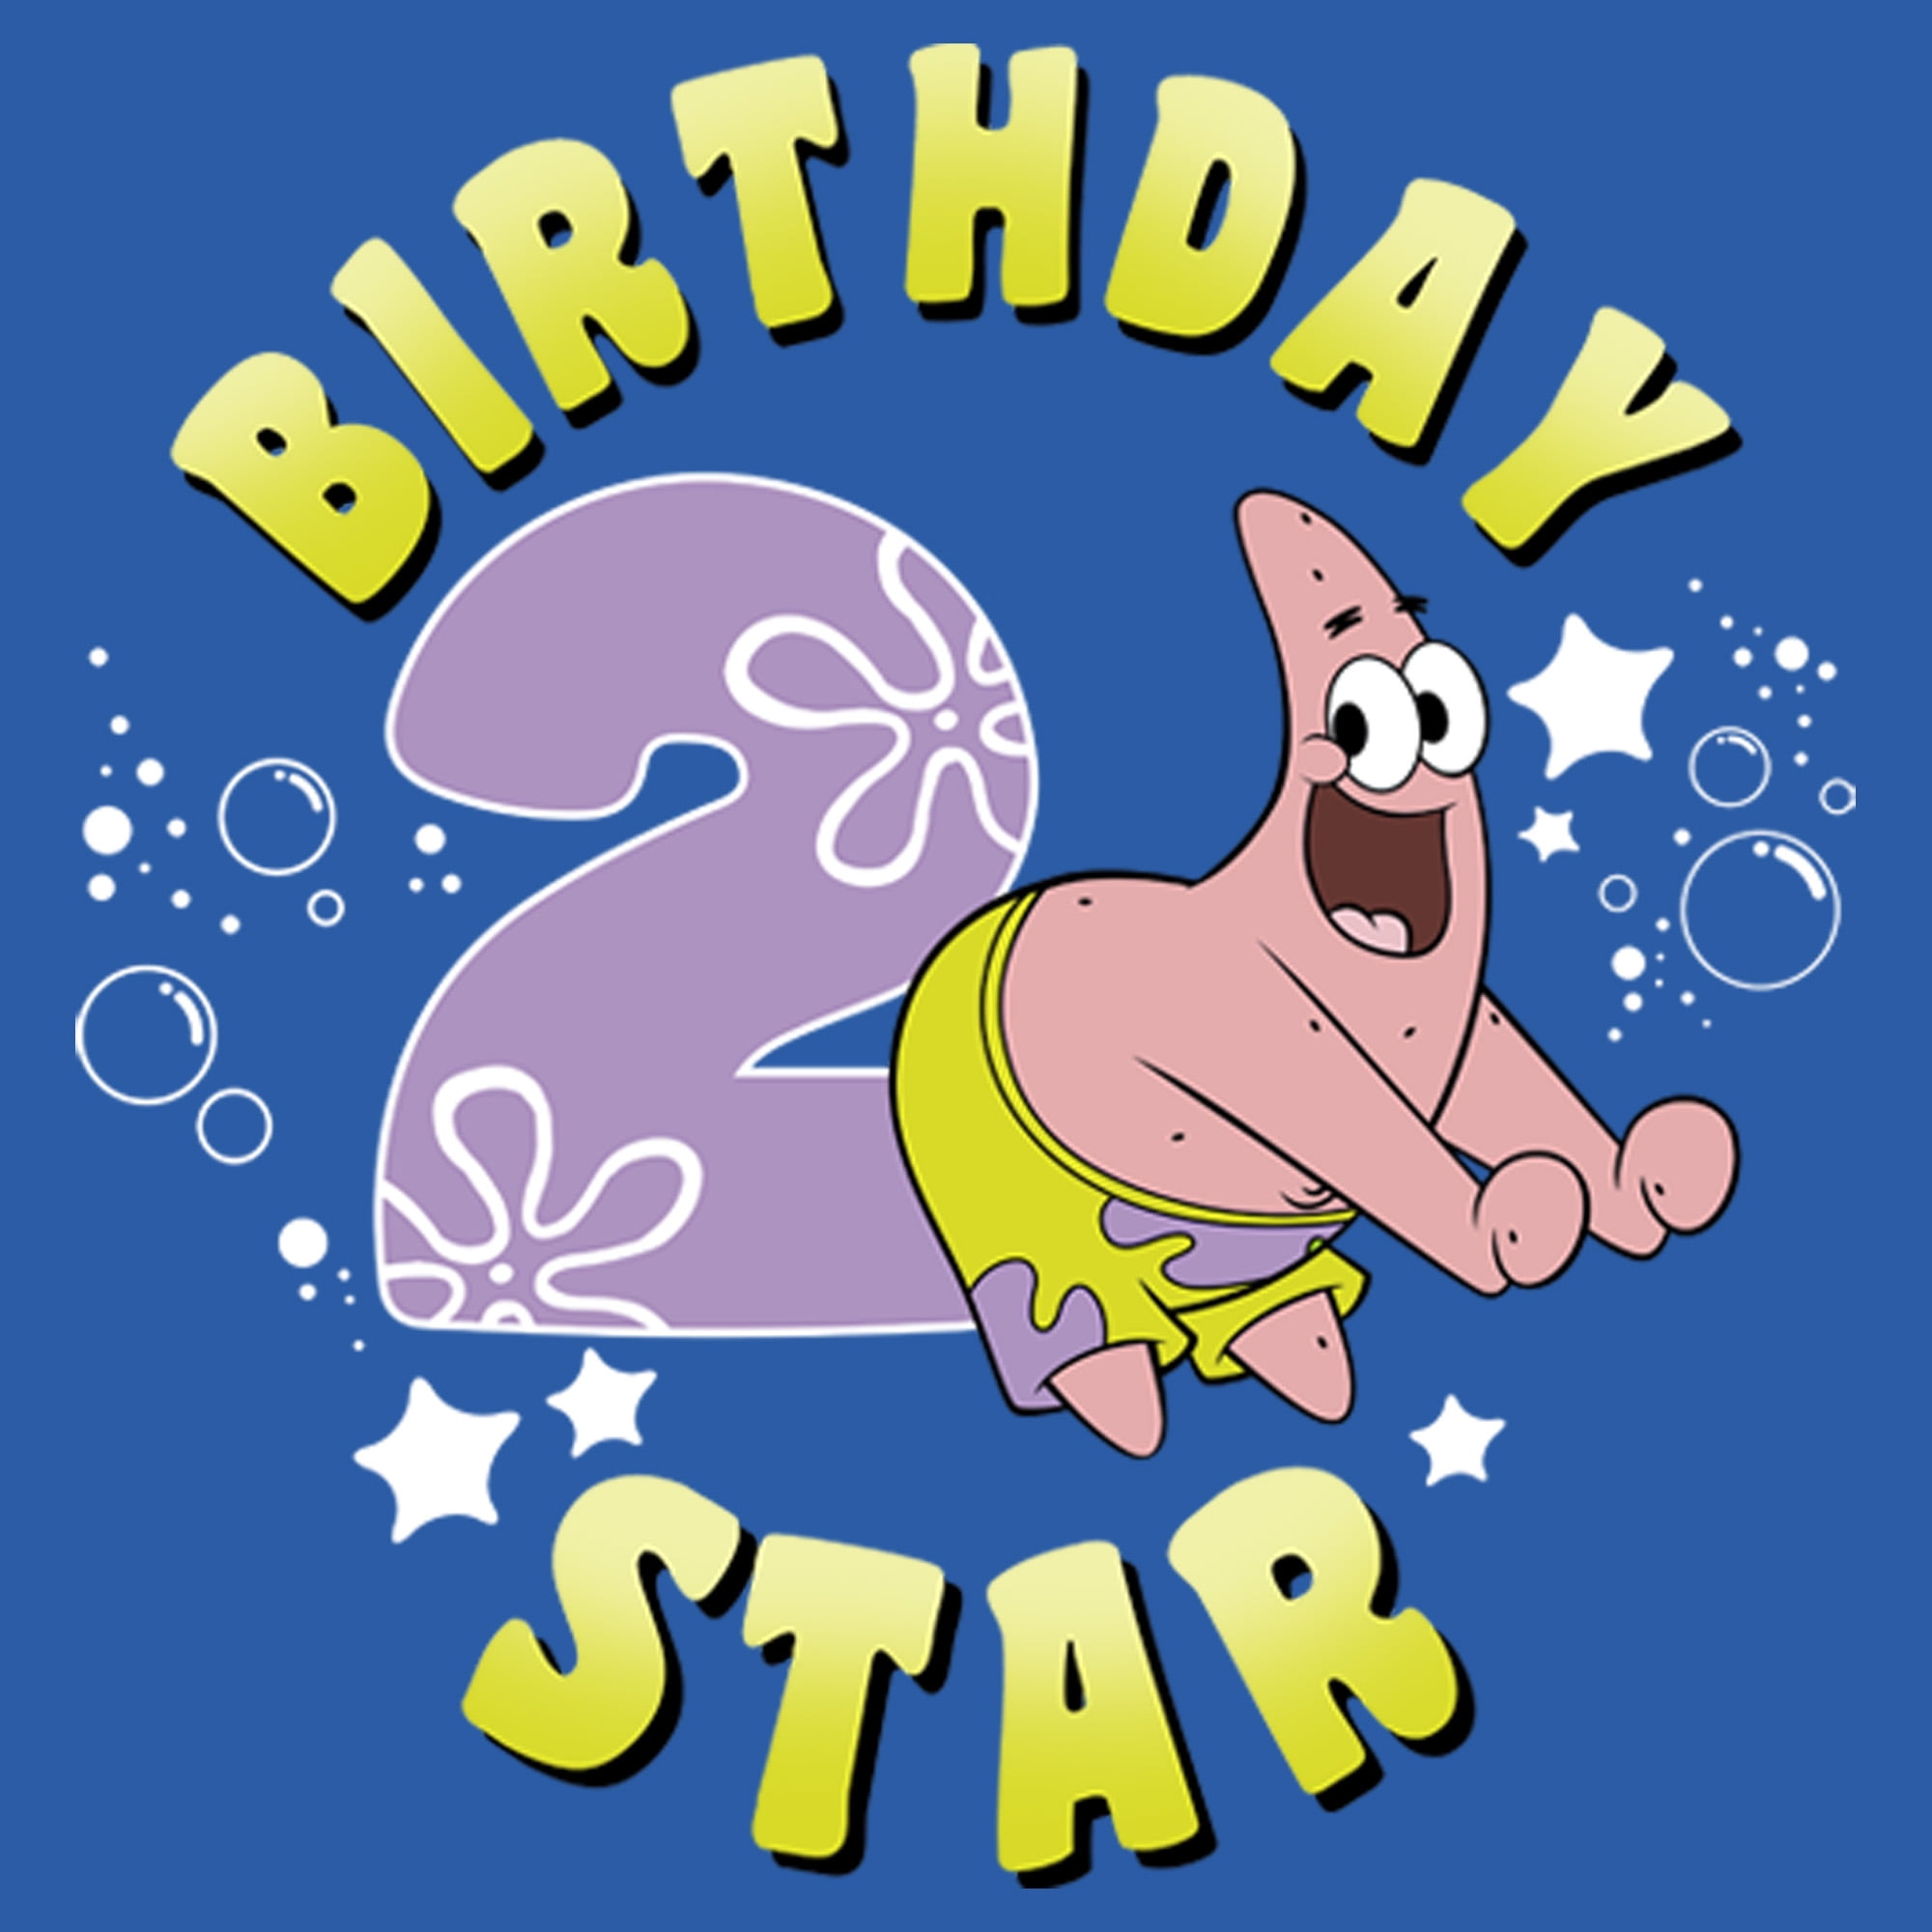 Toddler's SpongeBob SquarePants Birthday Patrick Star 2 Graphic